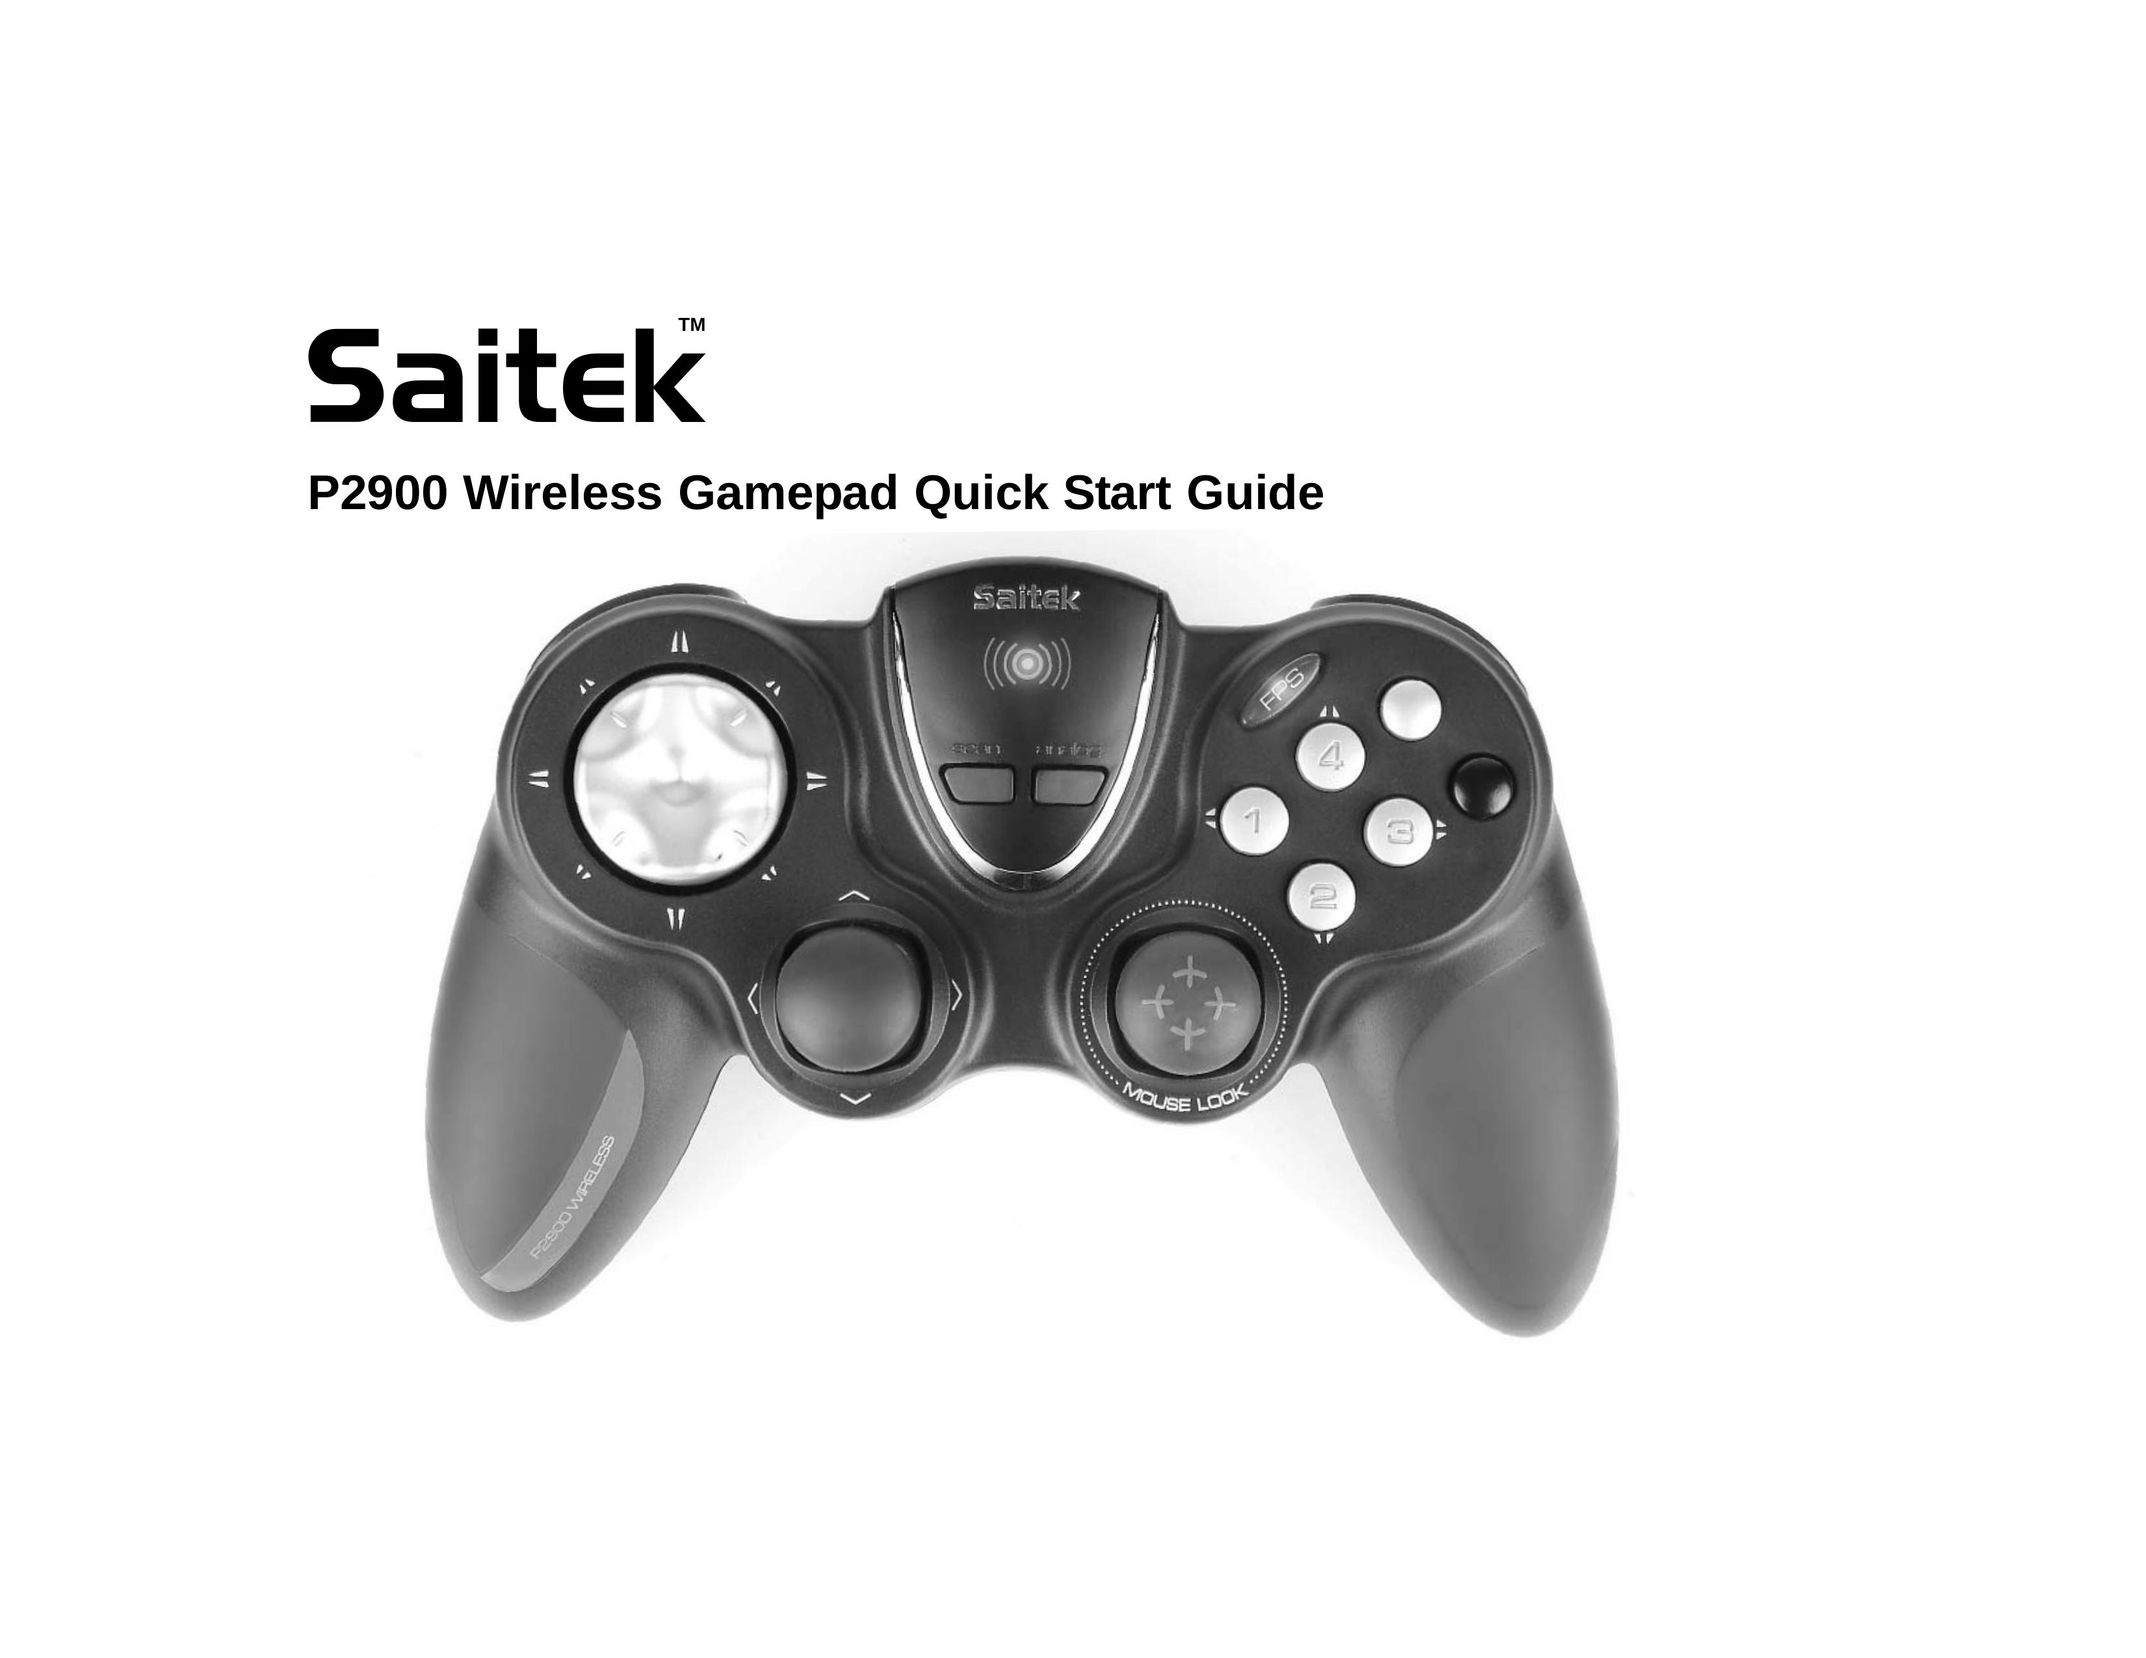 Saitek P2900 Video Game Controller User Manual